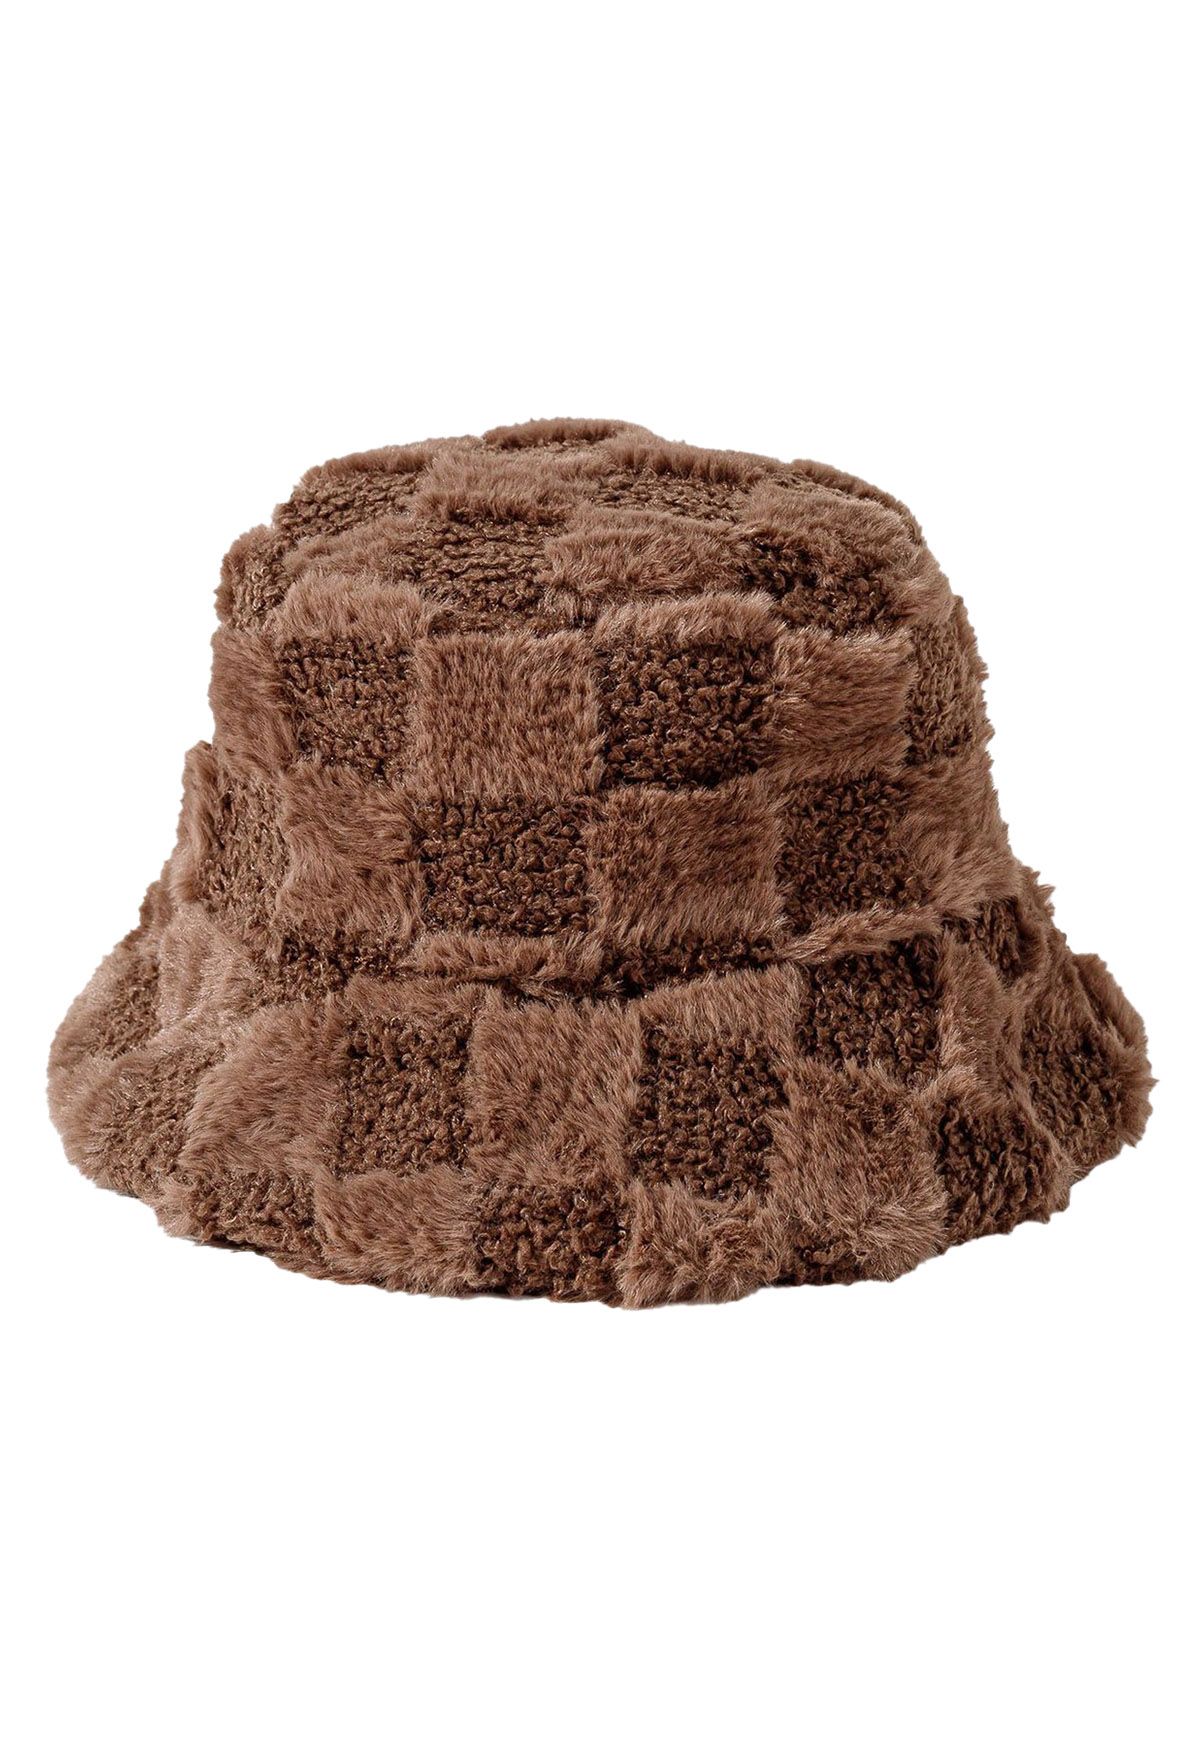 Sombrero de pescador borroso a cuadros en marrón